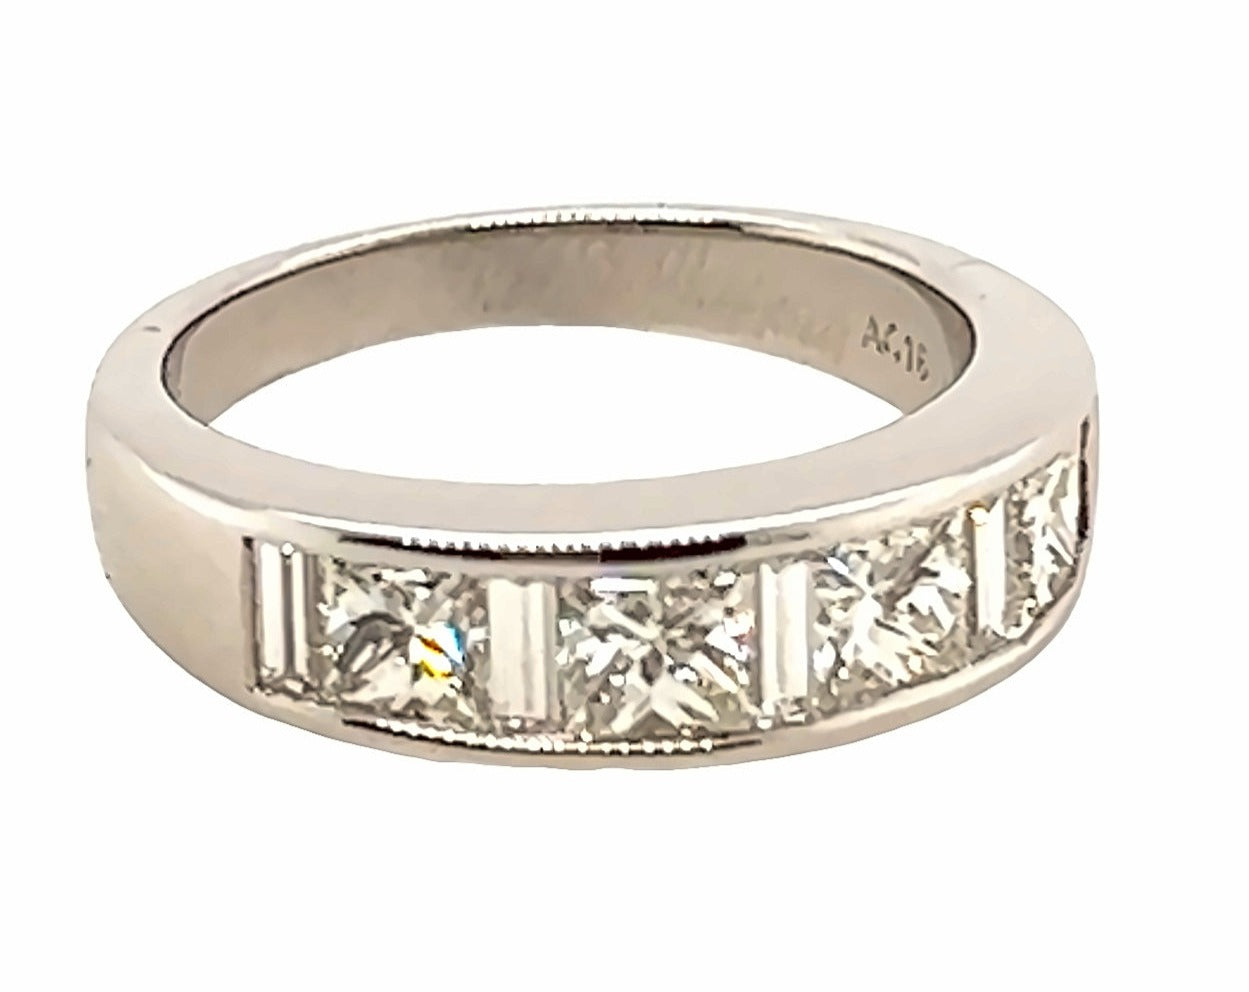 White Gold & Baguette Cut Diamond Ring